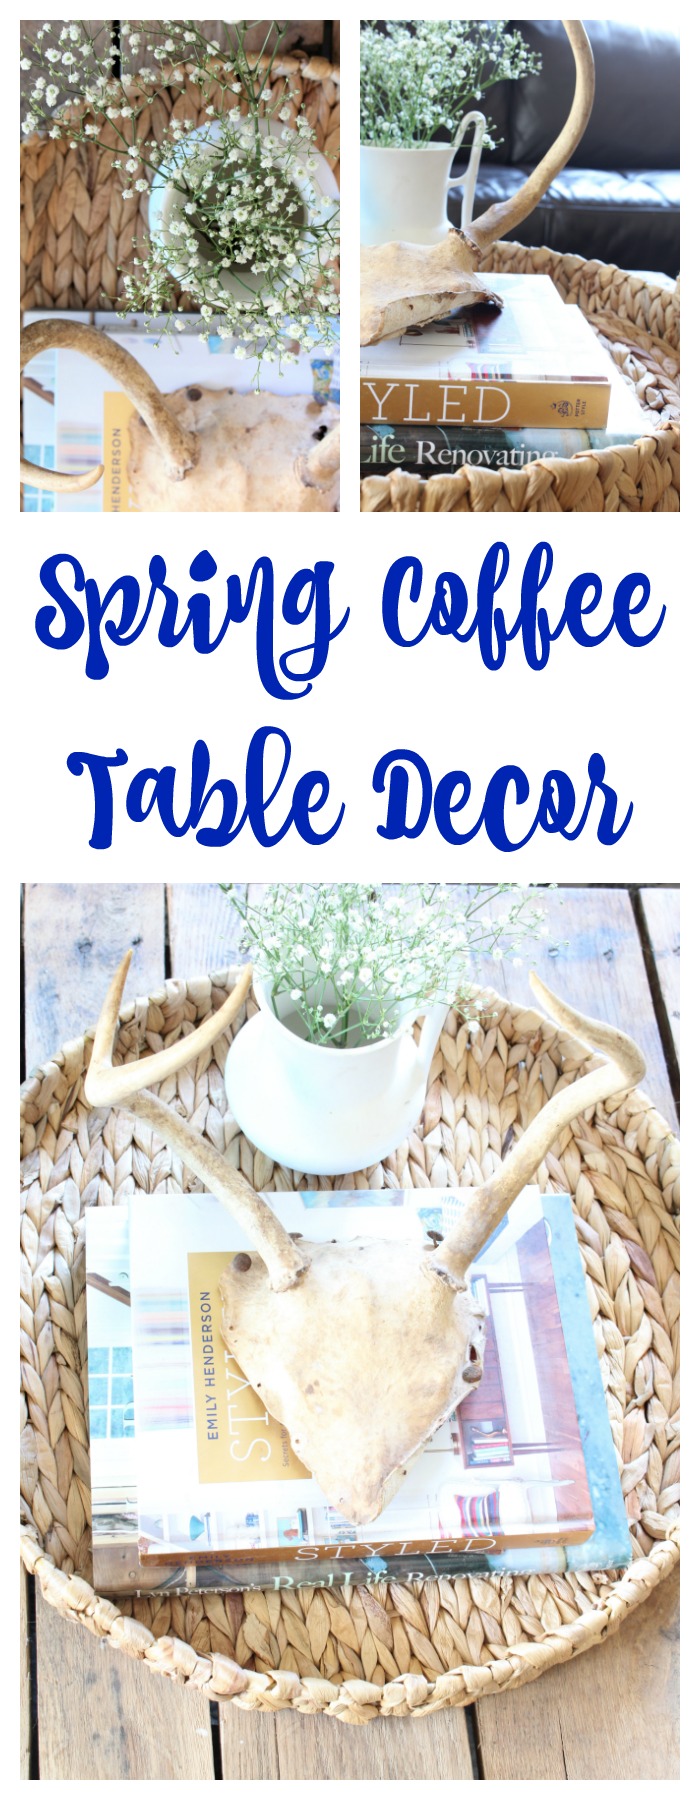 Spring Coffee Table Decor